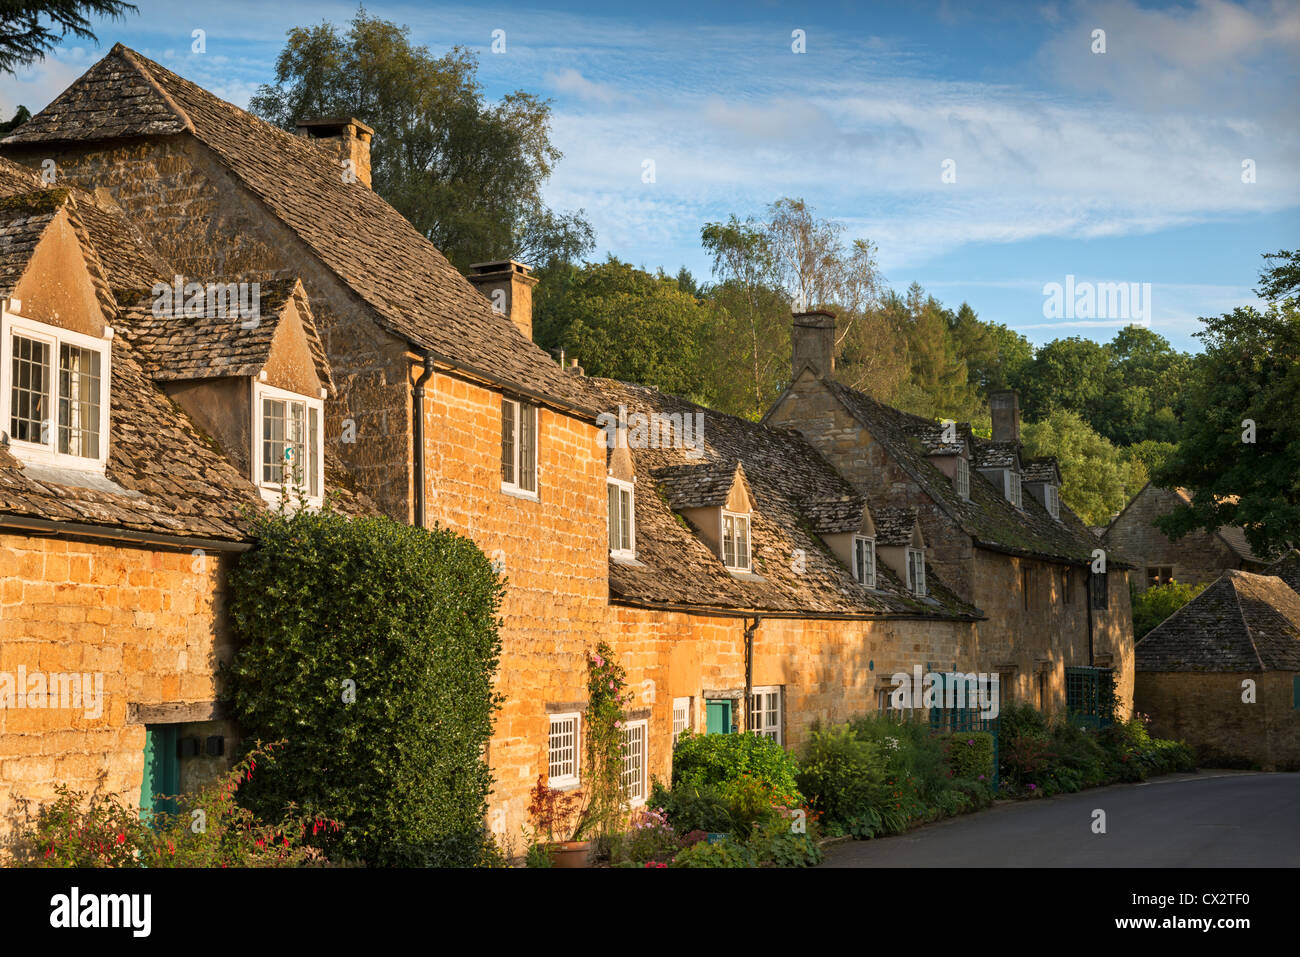 Ferienhäuser in den Cotswolds Dorf Snowshill, Gloucestershire, England. September 2012. Stockfoto